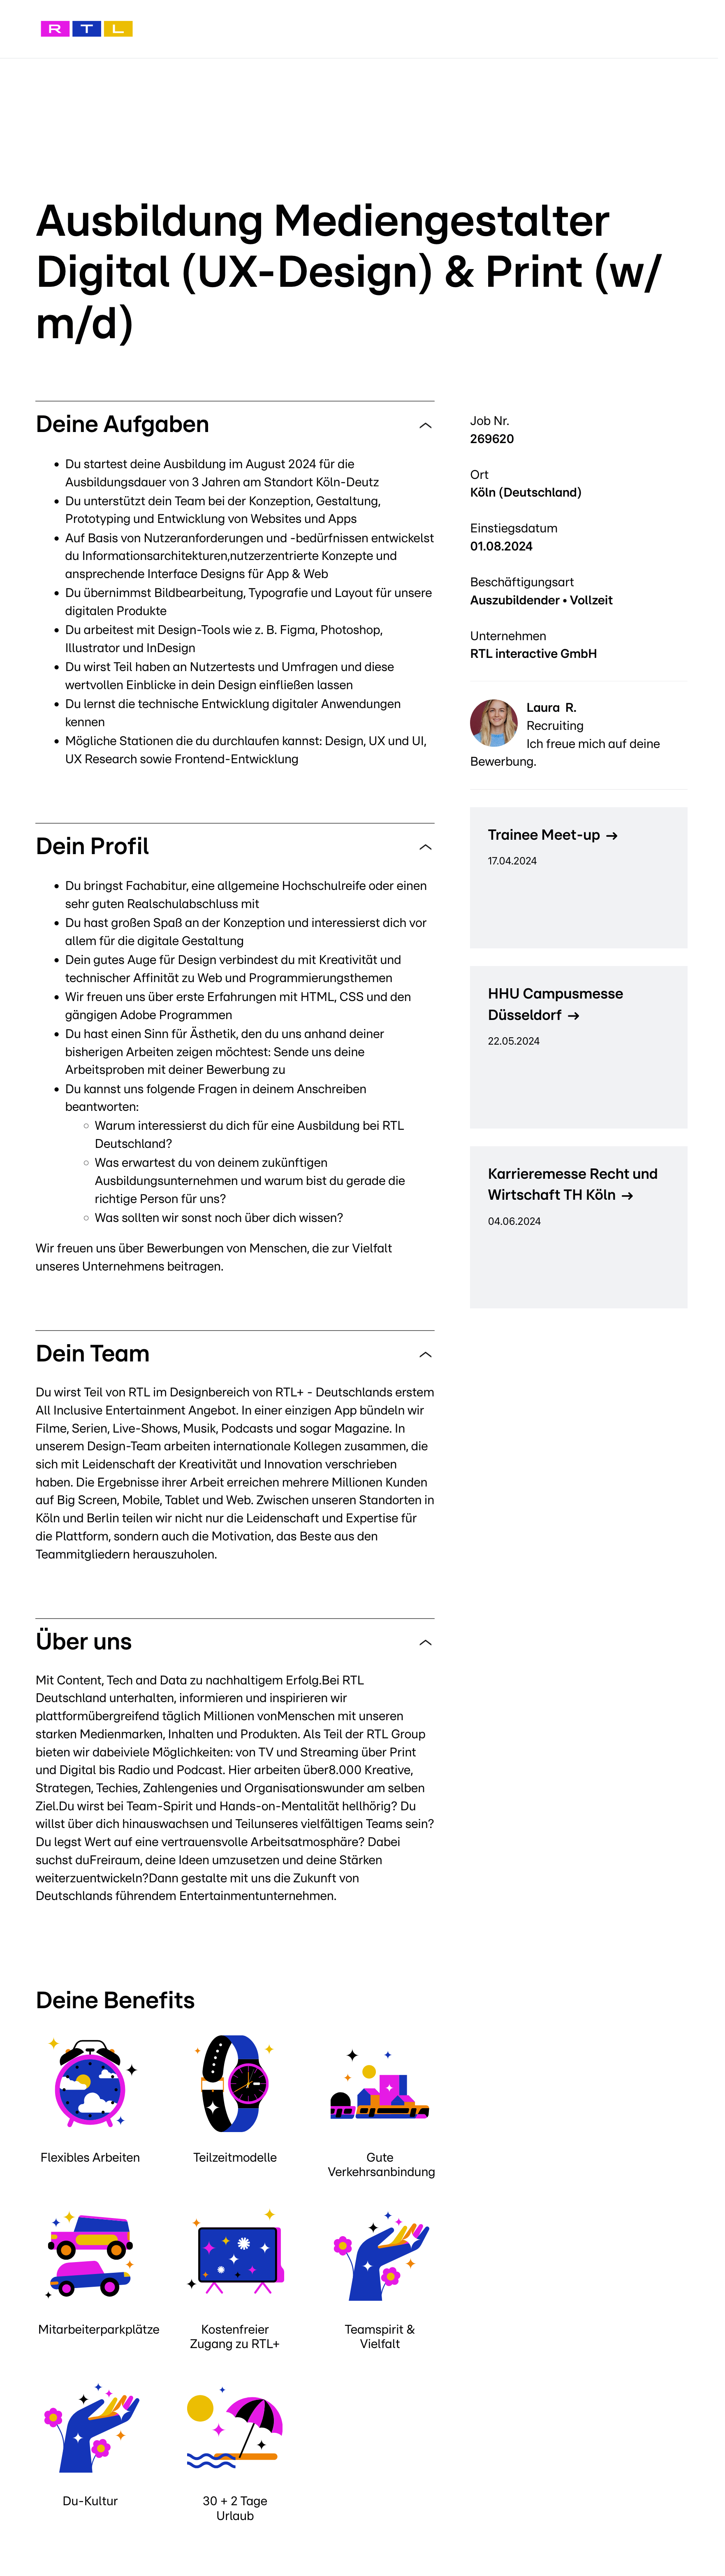 Ausbildung Mediengestalter Digital (UX-Design) & Print (w/m/d)